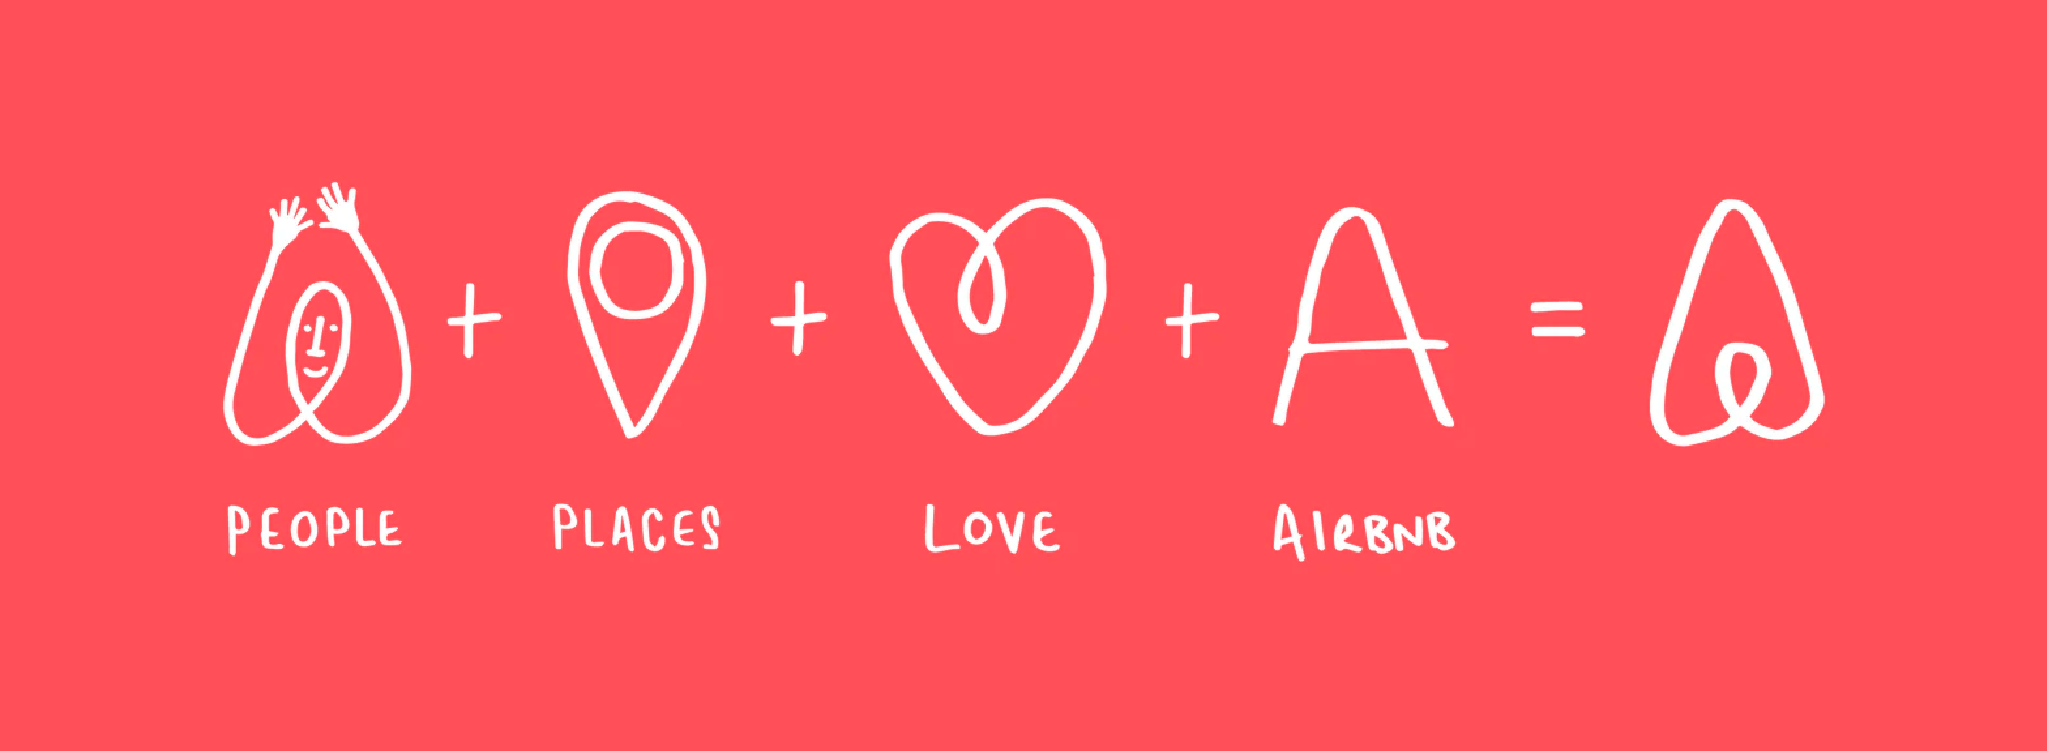 Elements of Airbnb rebranding logo 